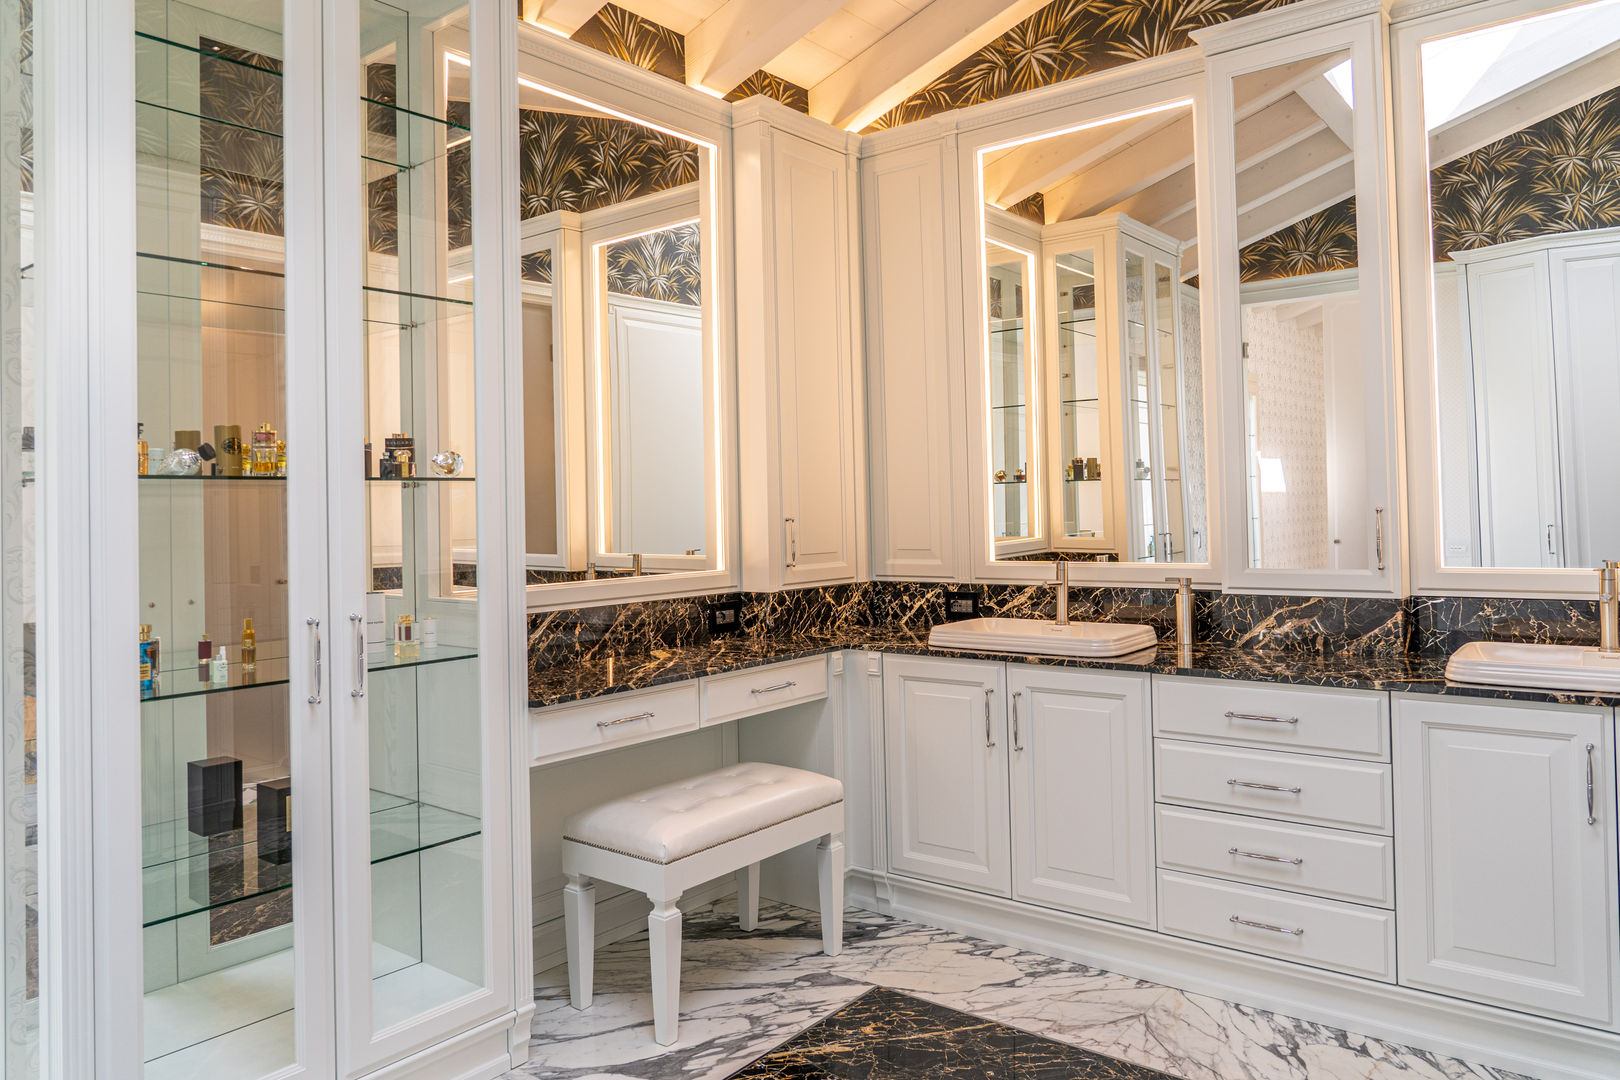 Villa rustica - Brummel, Brummel Brummel Rustic style bathroom Solid Wood Multicolored